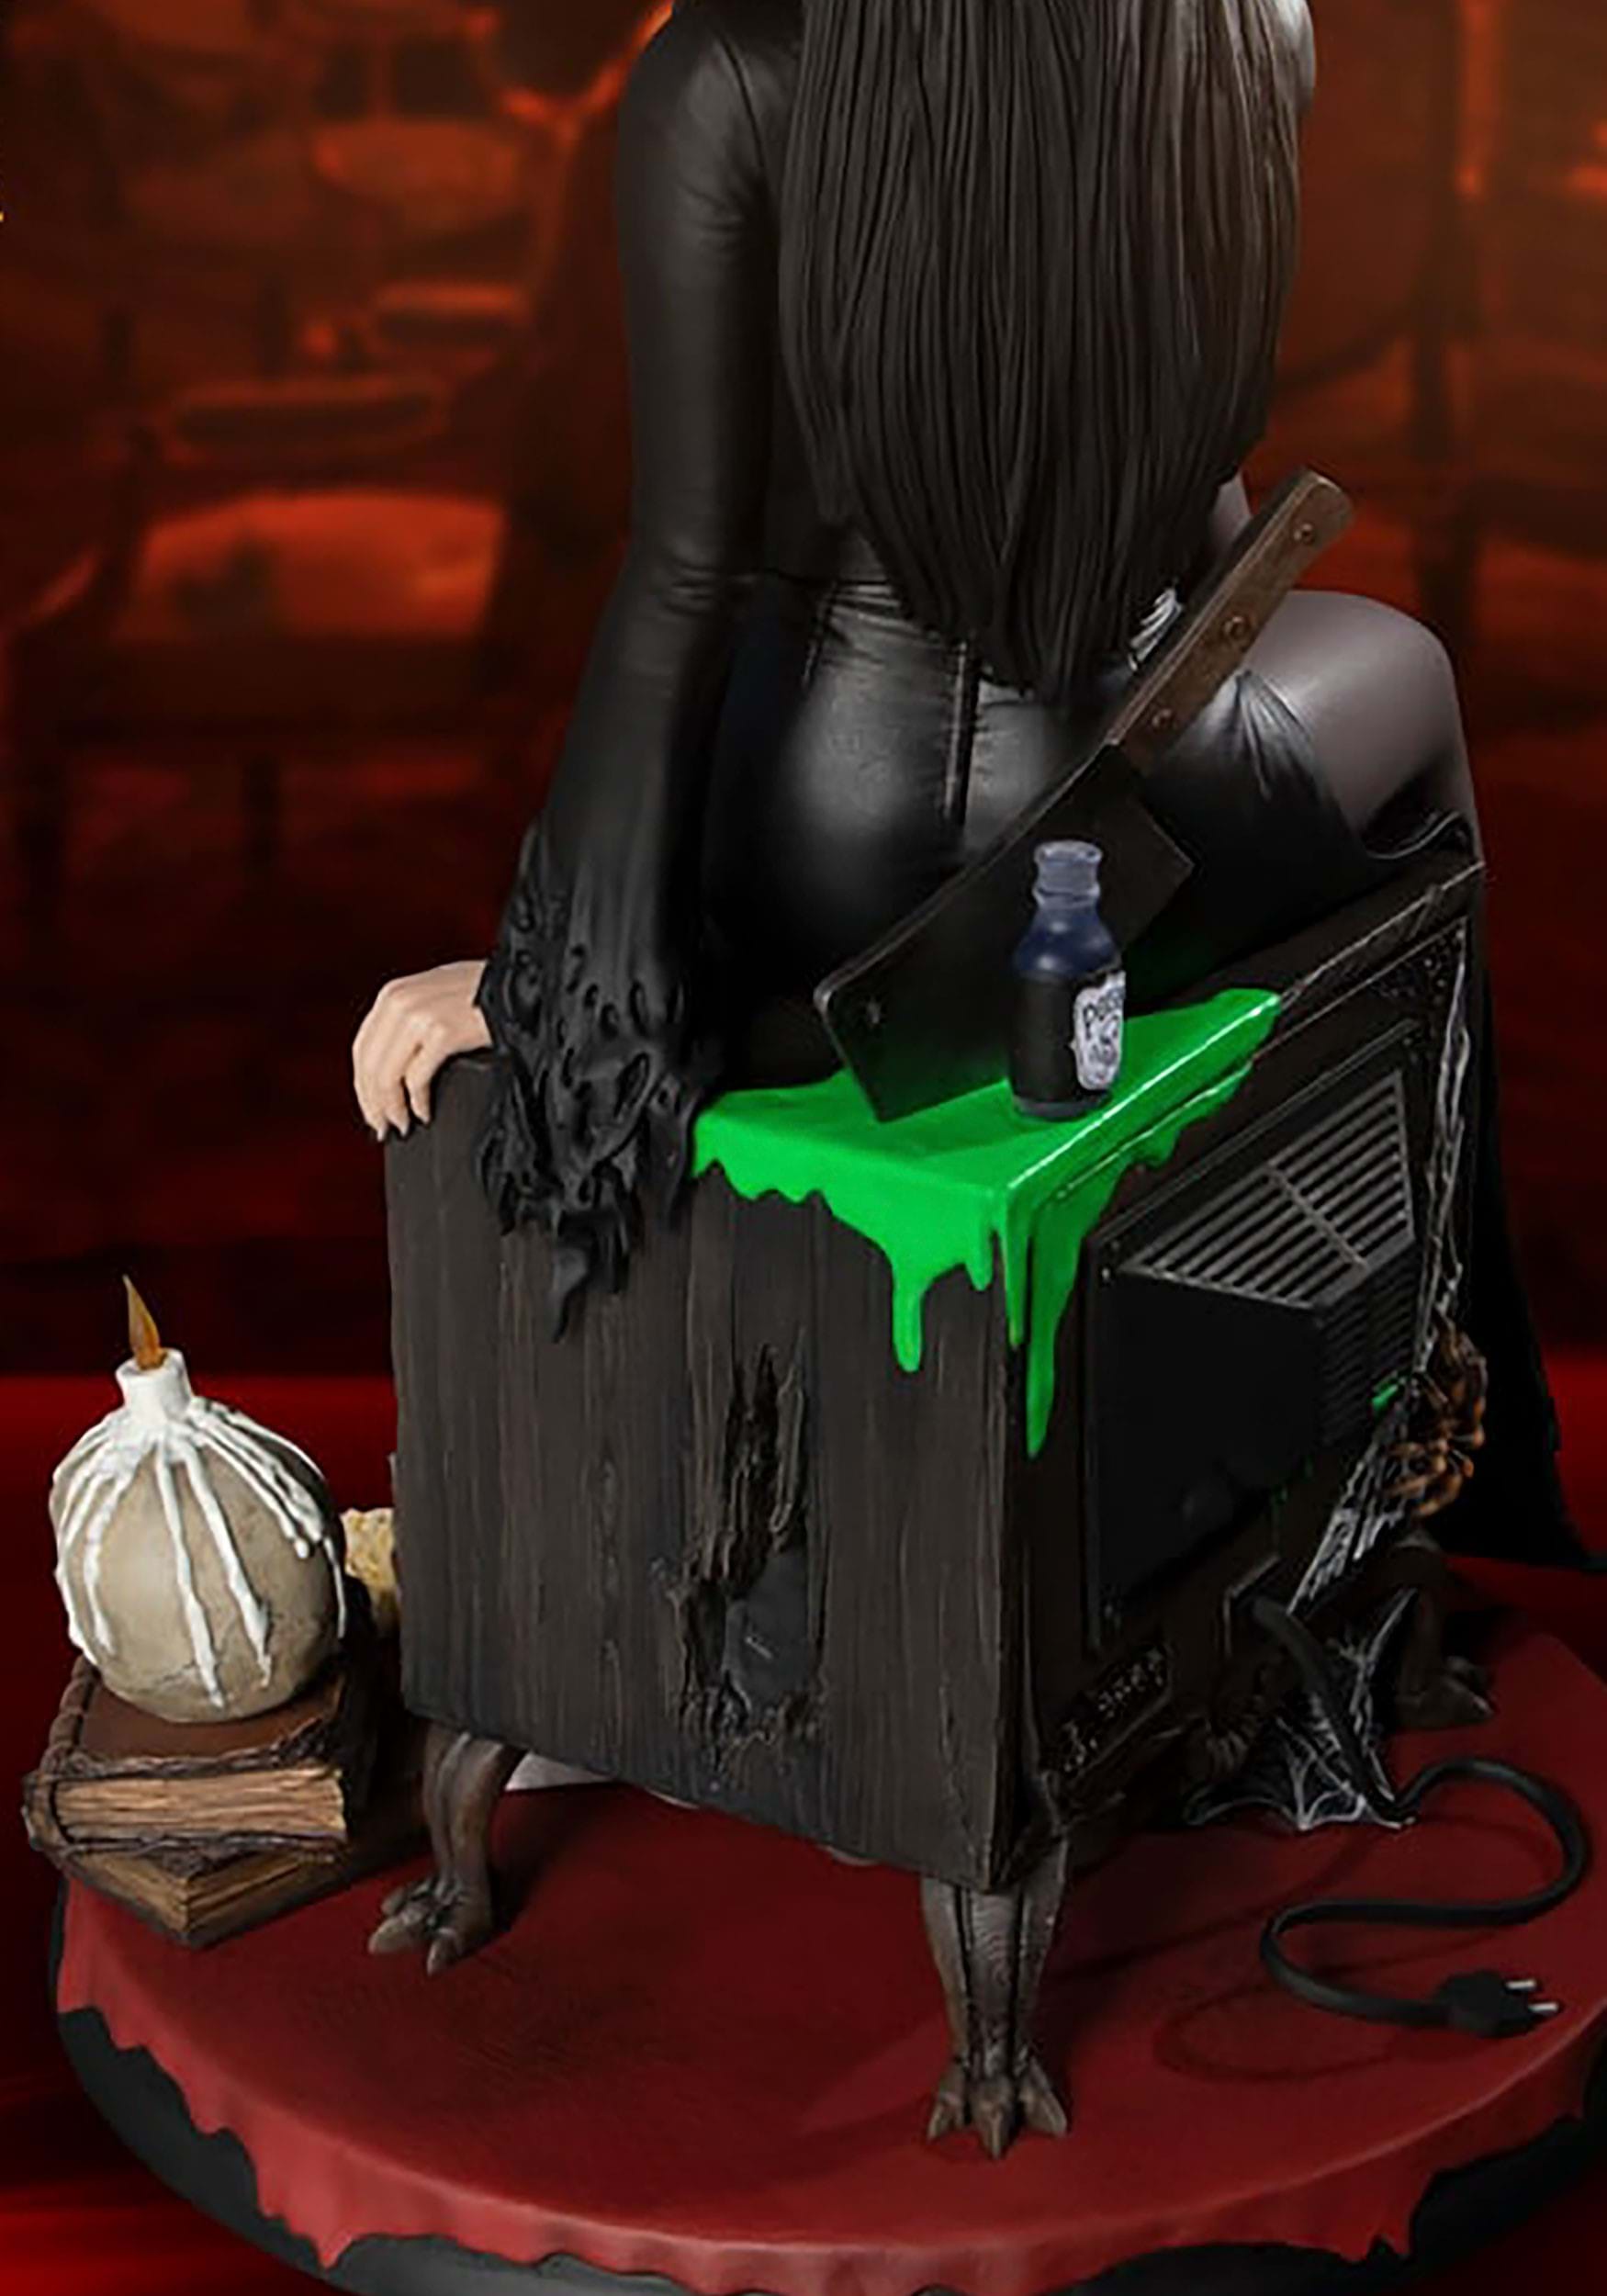 Elvira: Mistress Of The Dark Static-6 Elvira Scale Statue